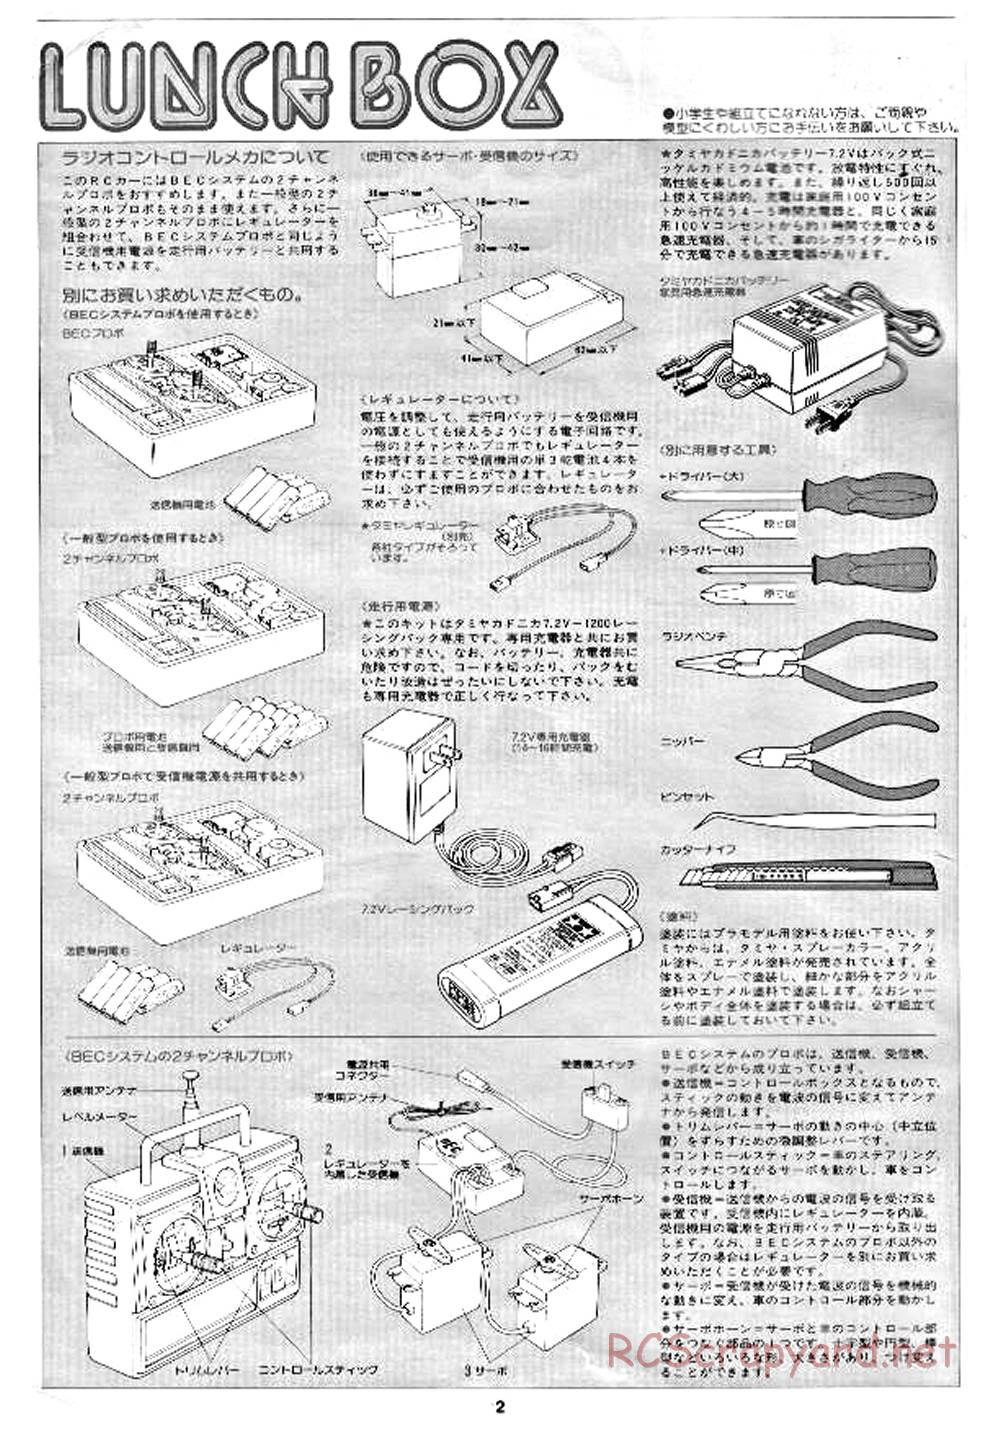 Tamiya - Lunchbox - 58063 - Manual - Page 2